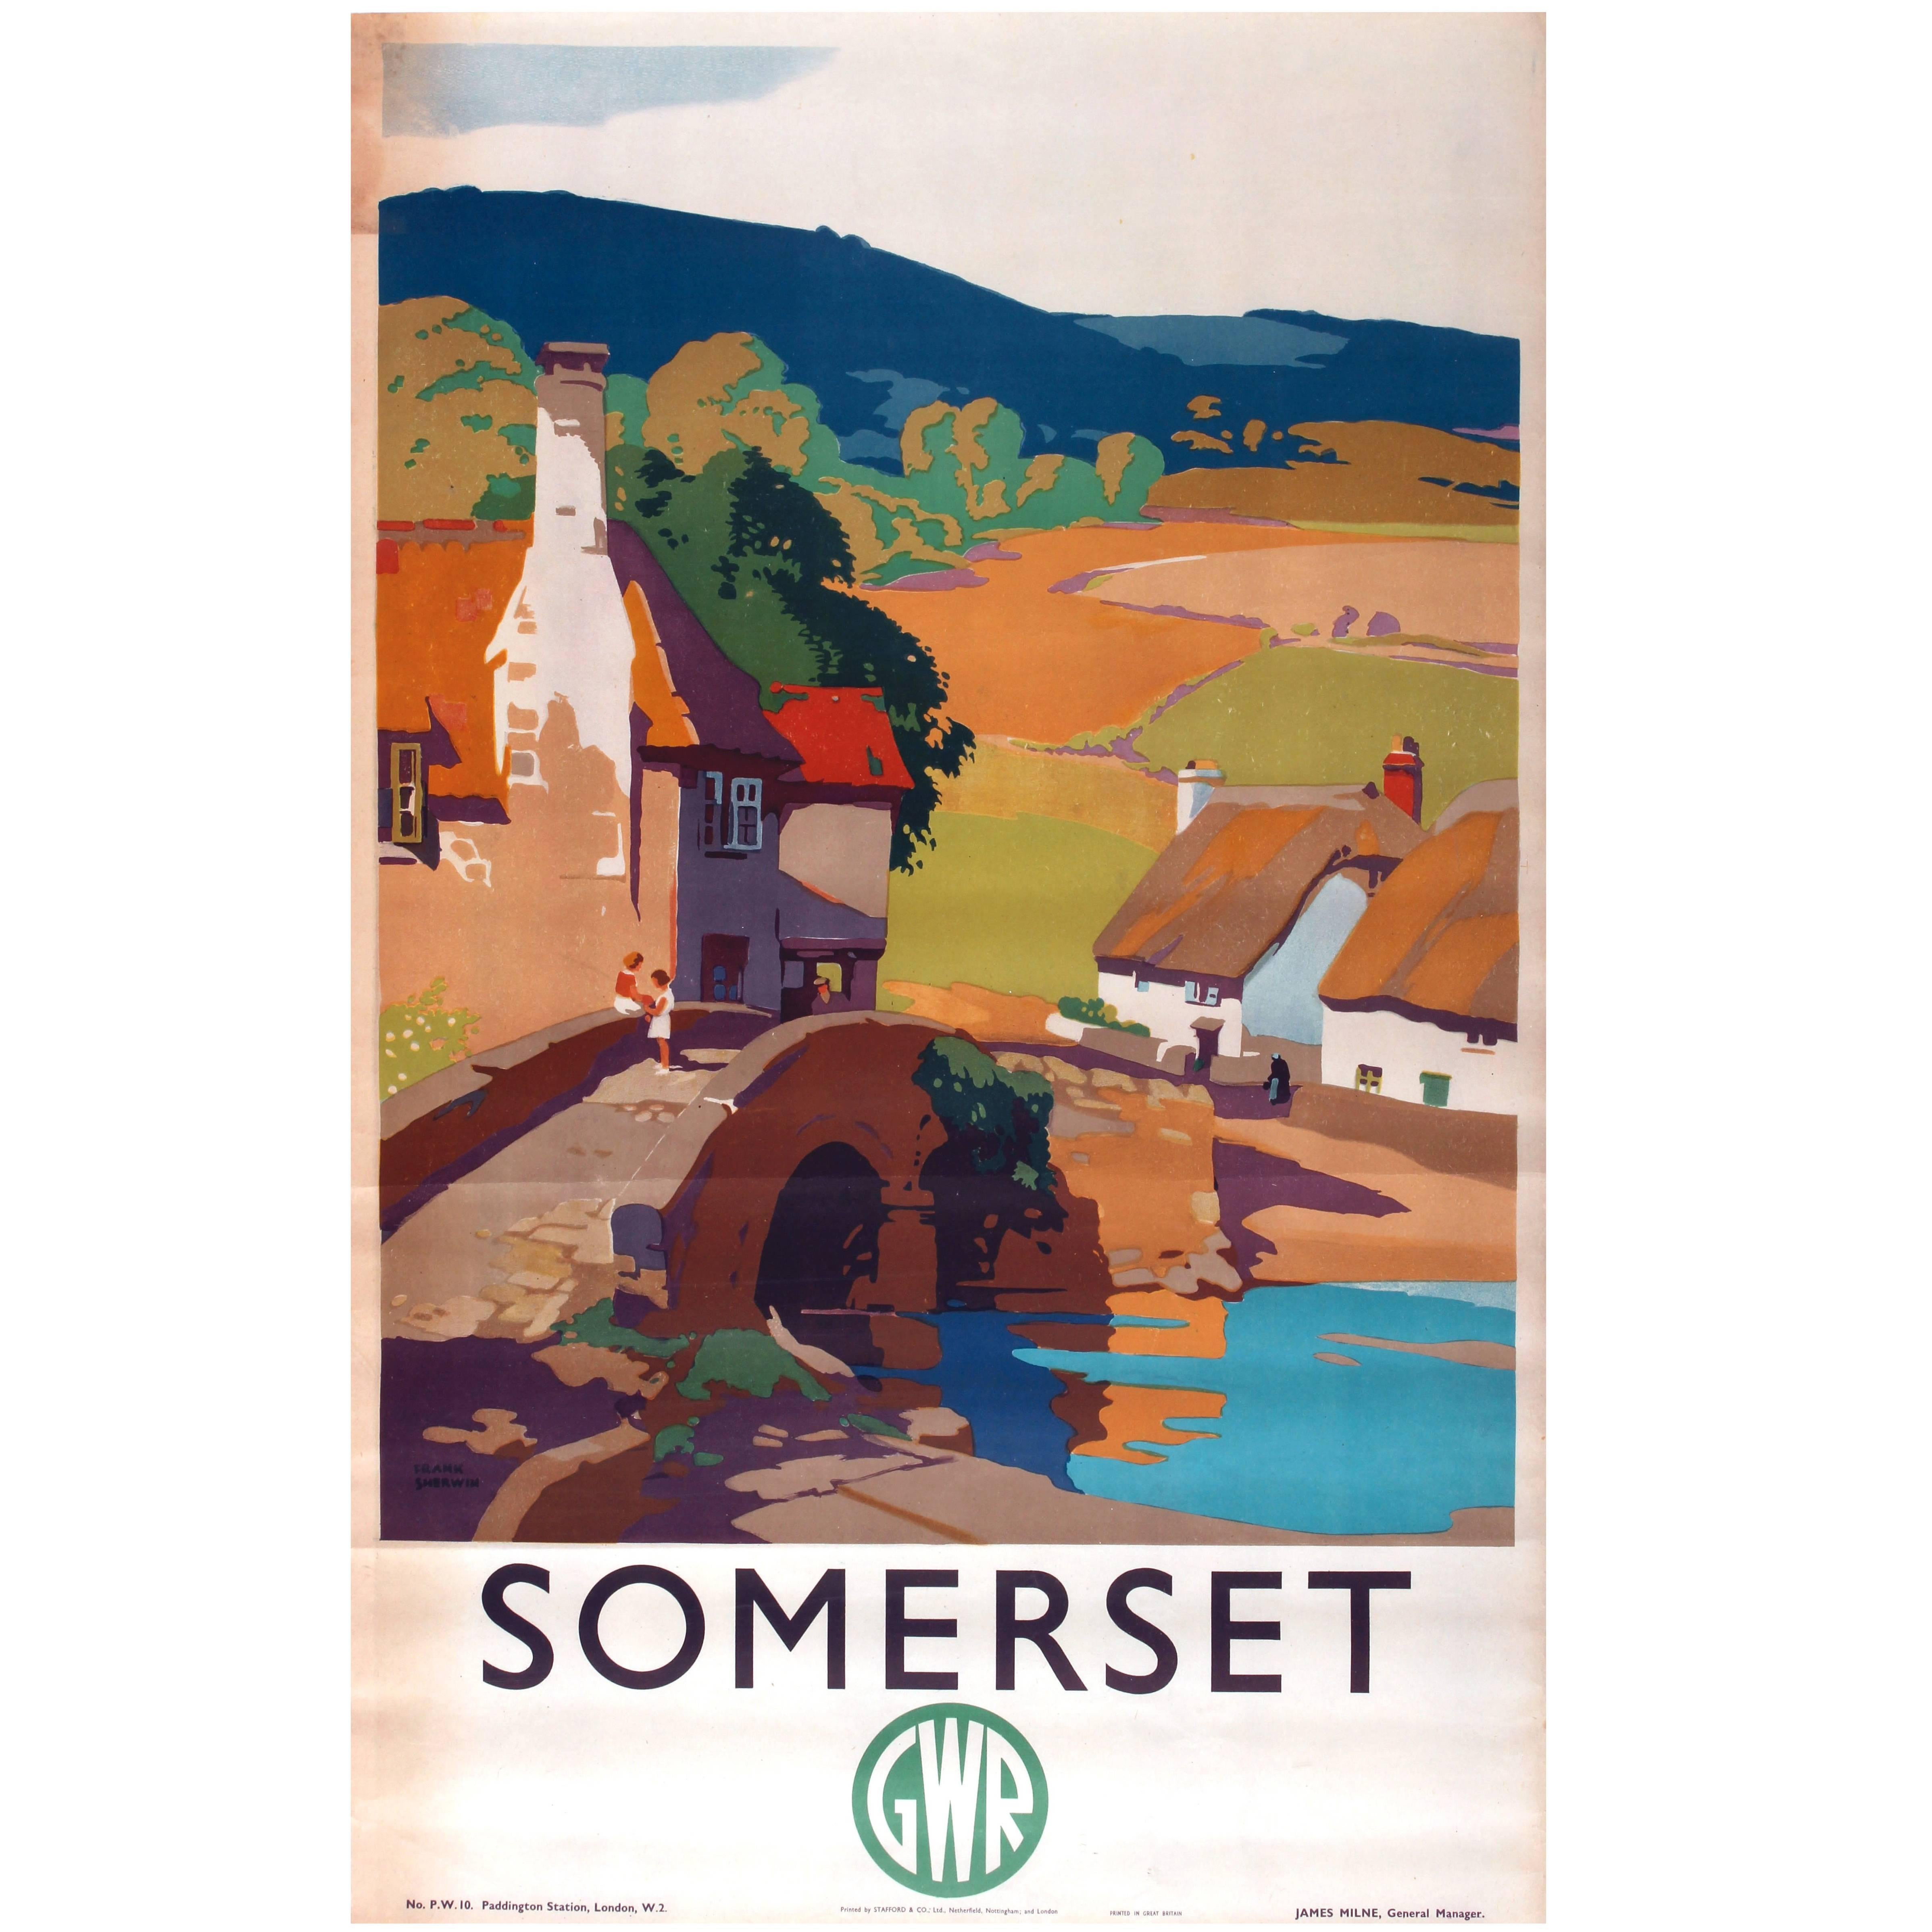 Original Vintage Great Western Railway Travel Poster Advertising Somerset by GWR